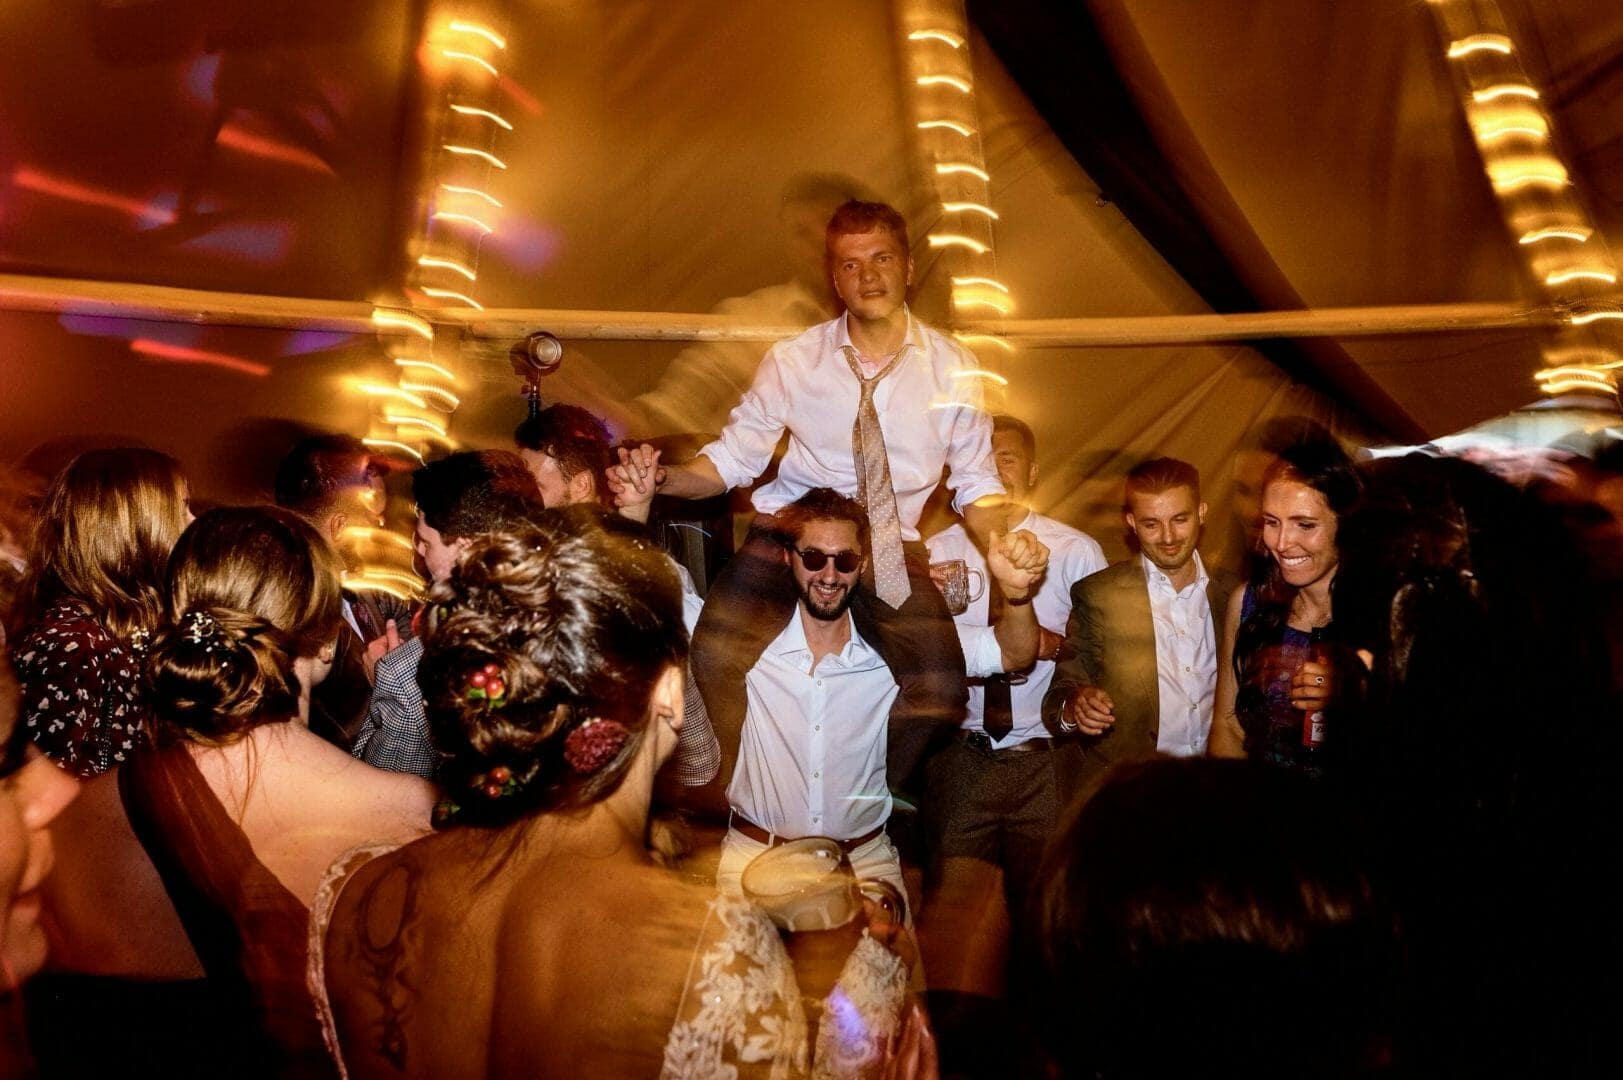 Tipi wedding dancefloor mayhem